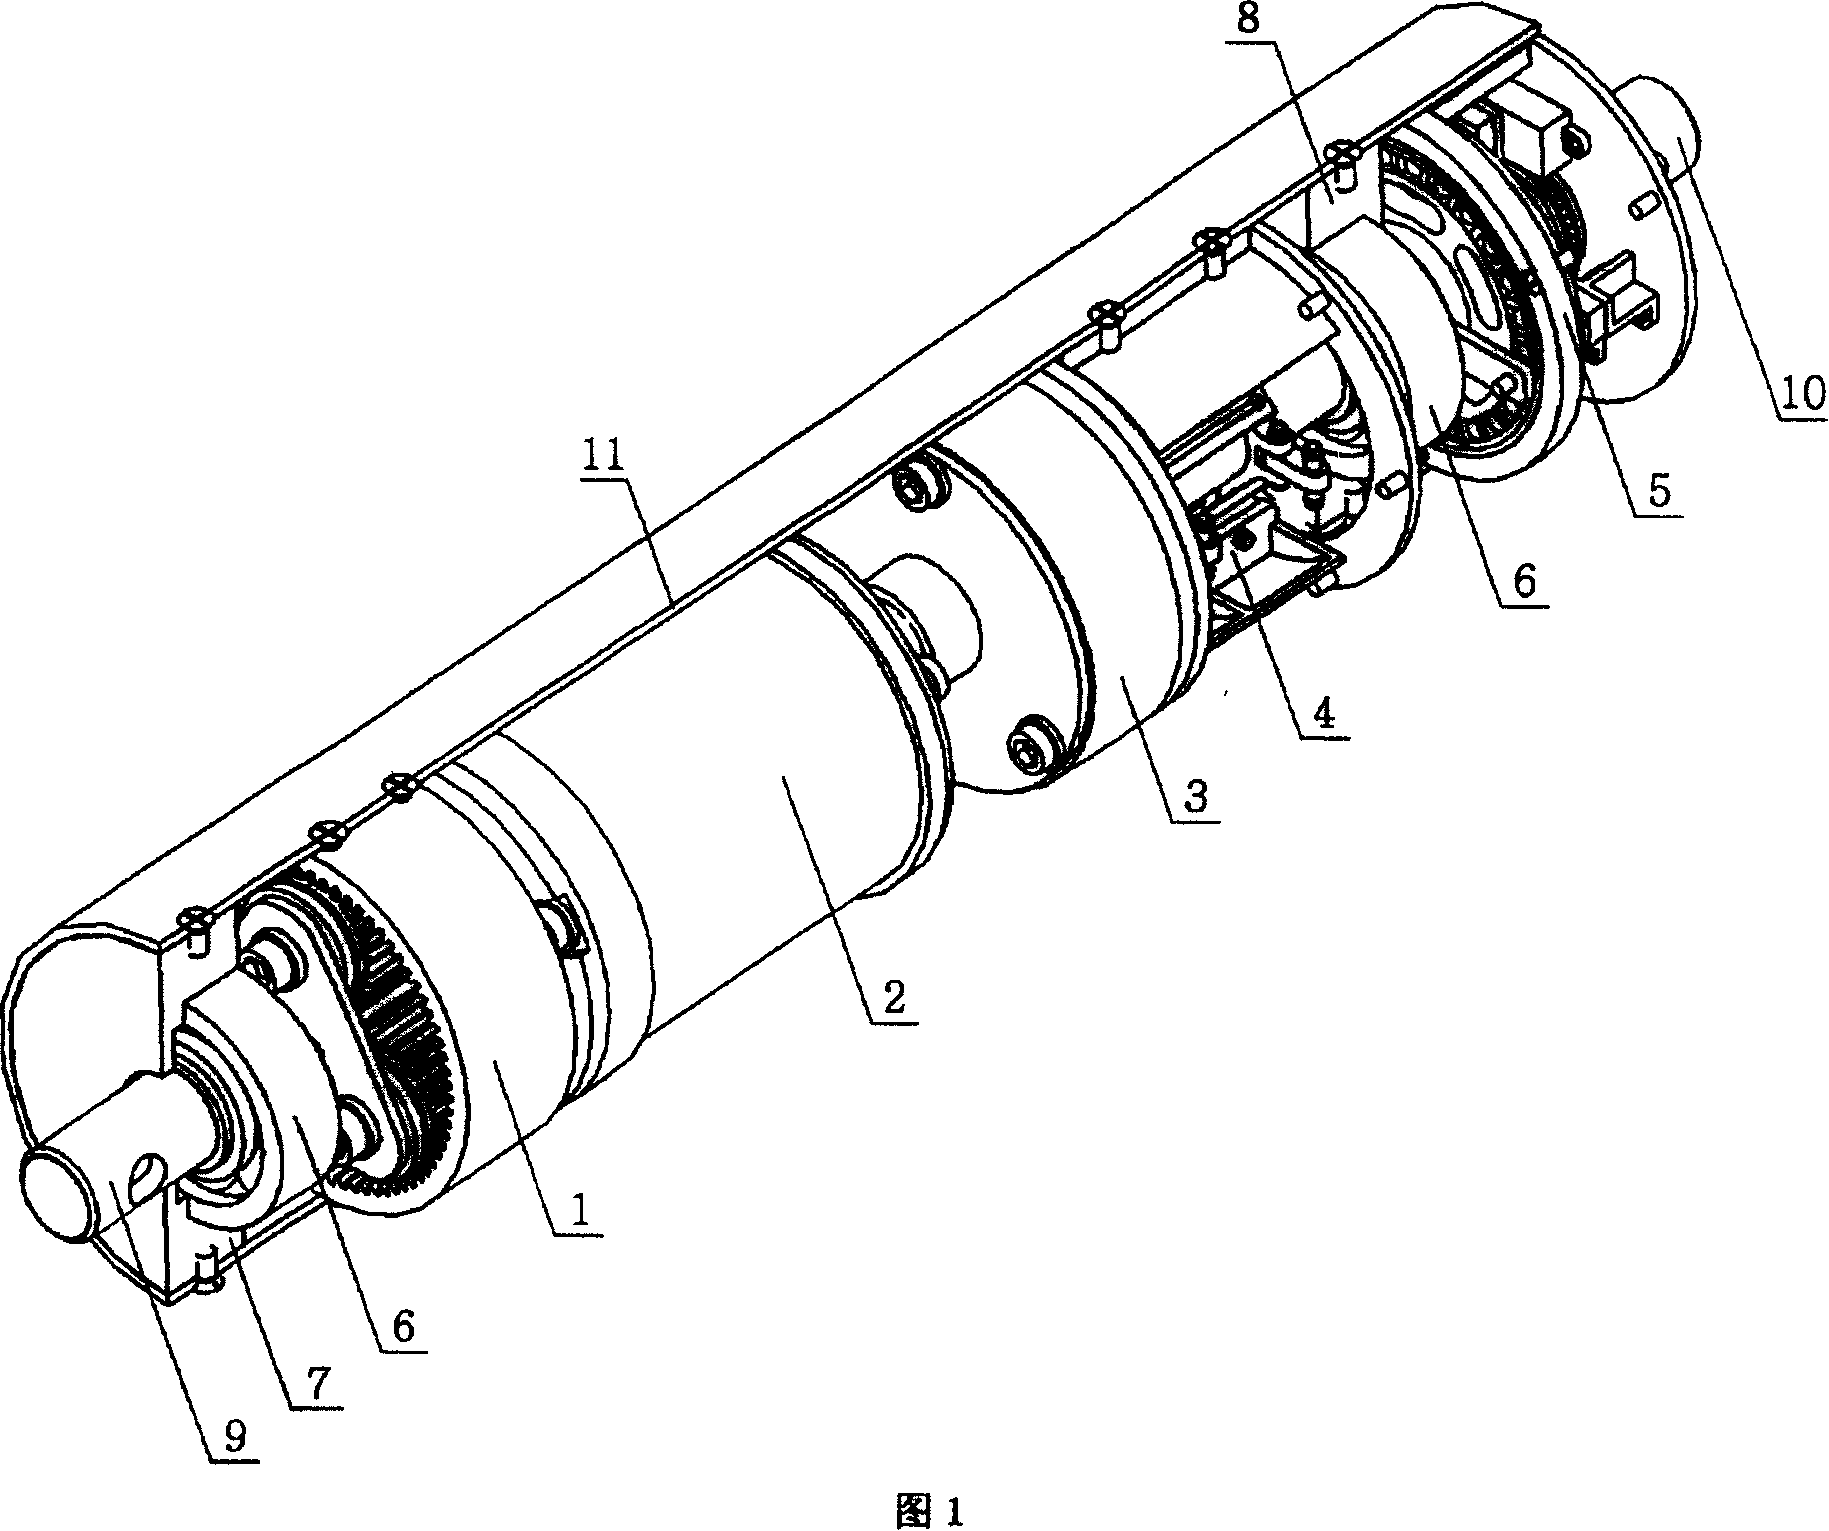 Tube-type electric motor